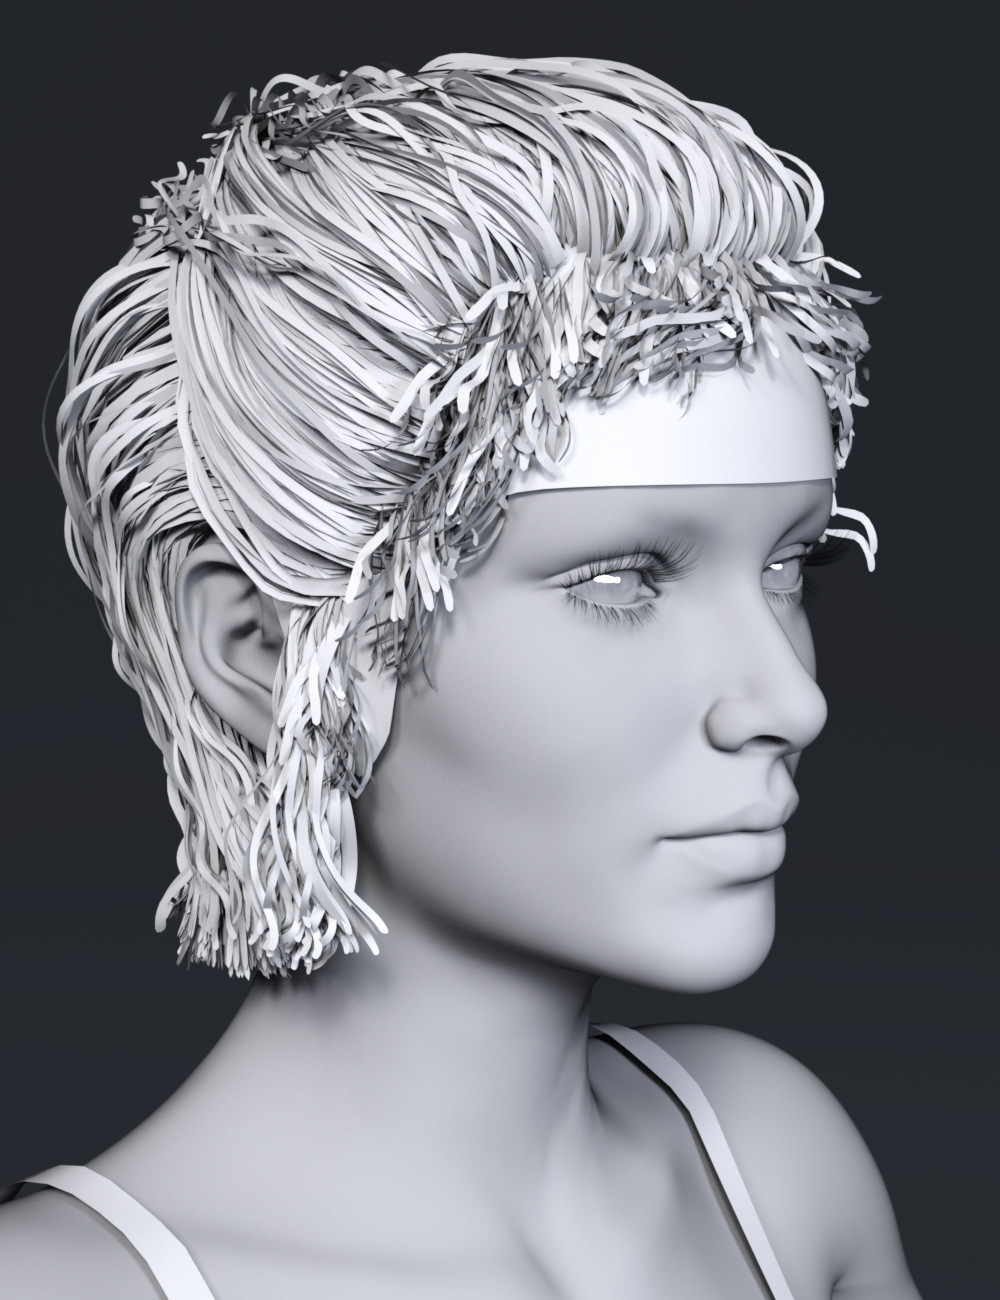 LL Hair for Genesis 8 Females by: Sprite, 3D Models by Daz 3D